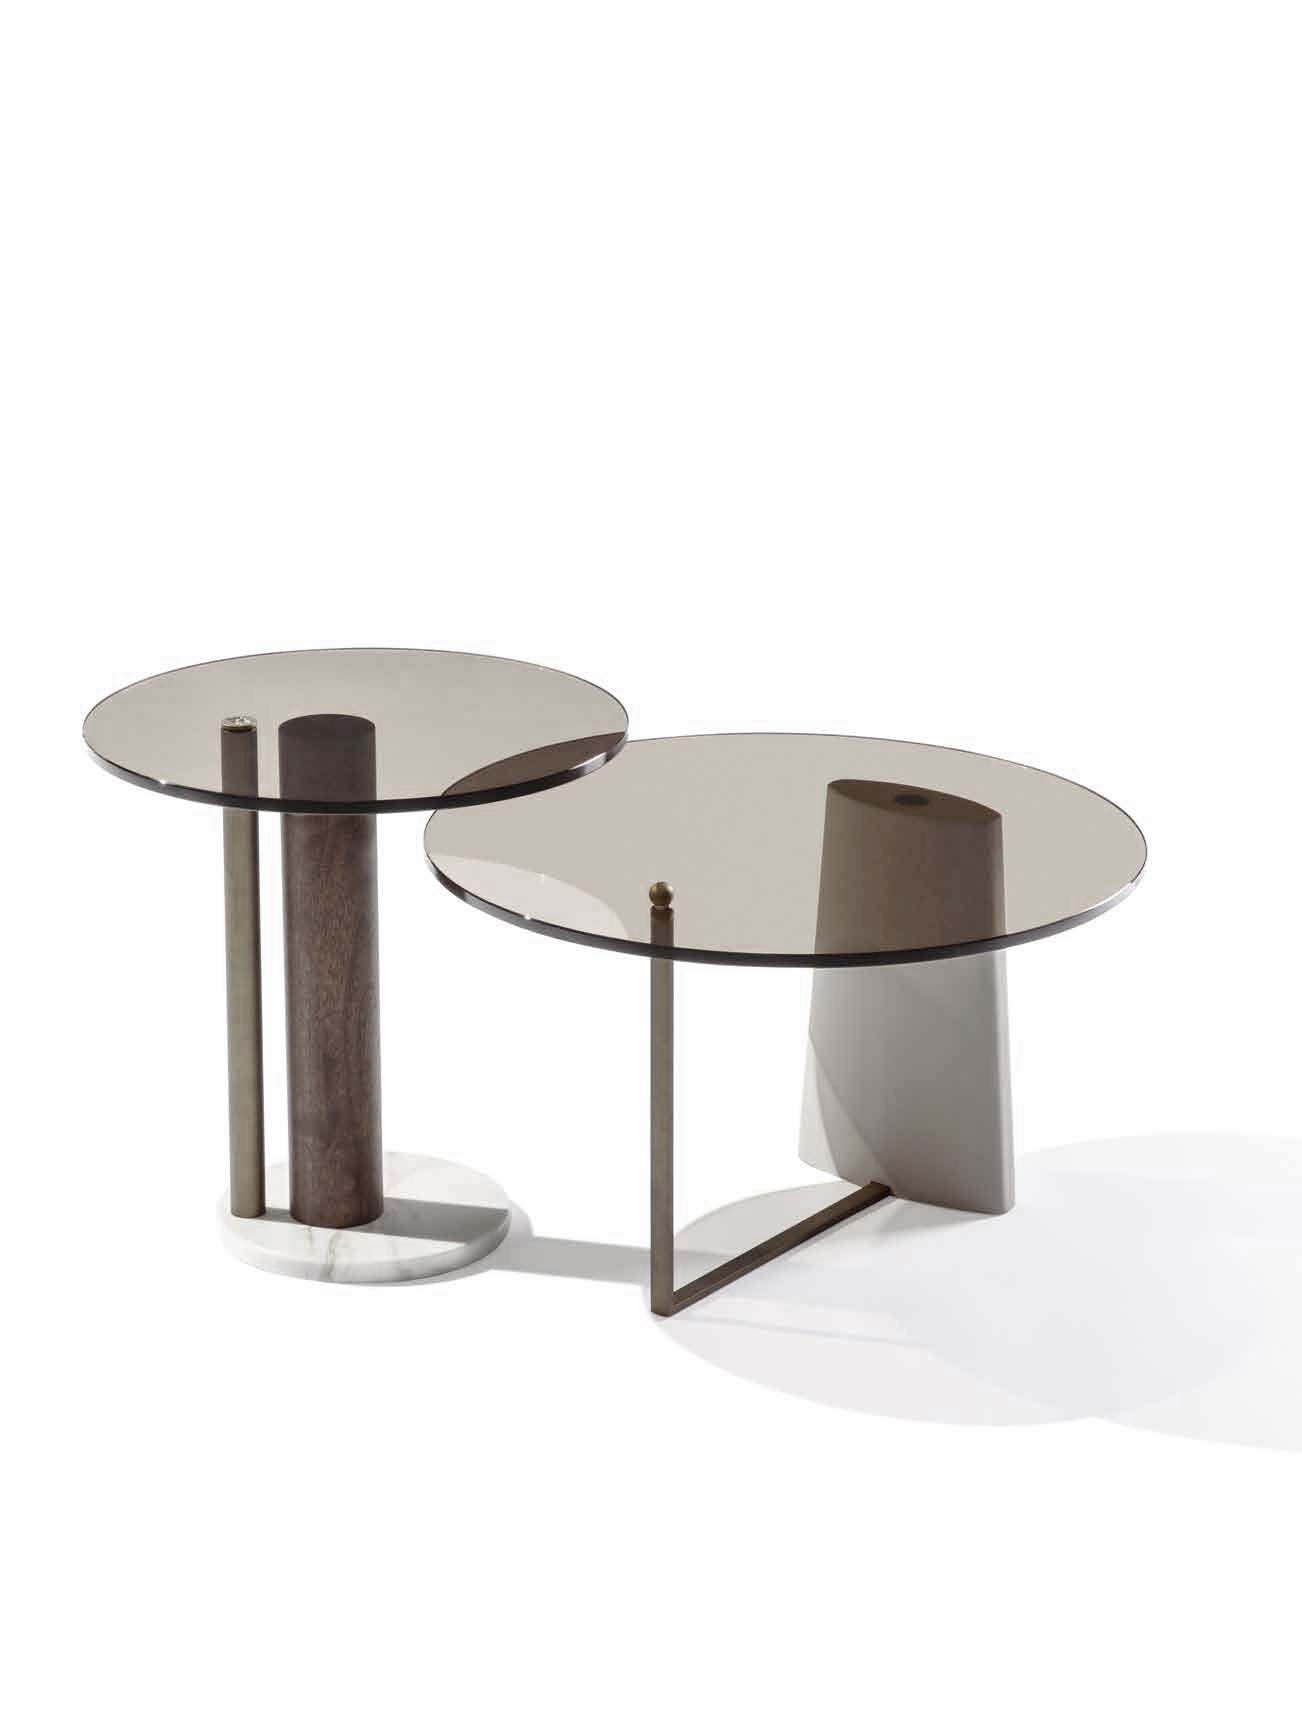 RIALTO H-L I Coffee table by Carpanese - $2,600